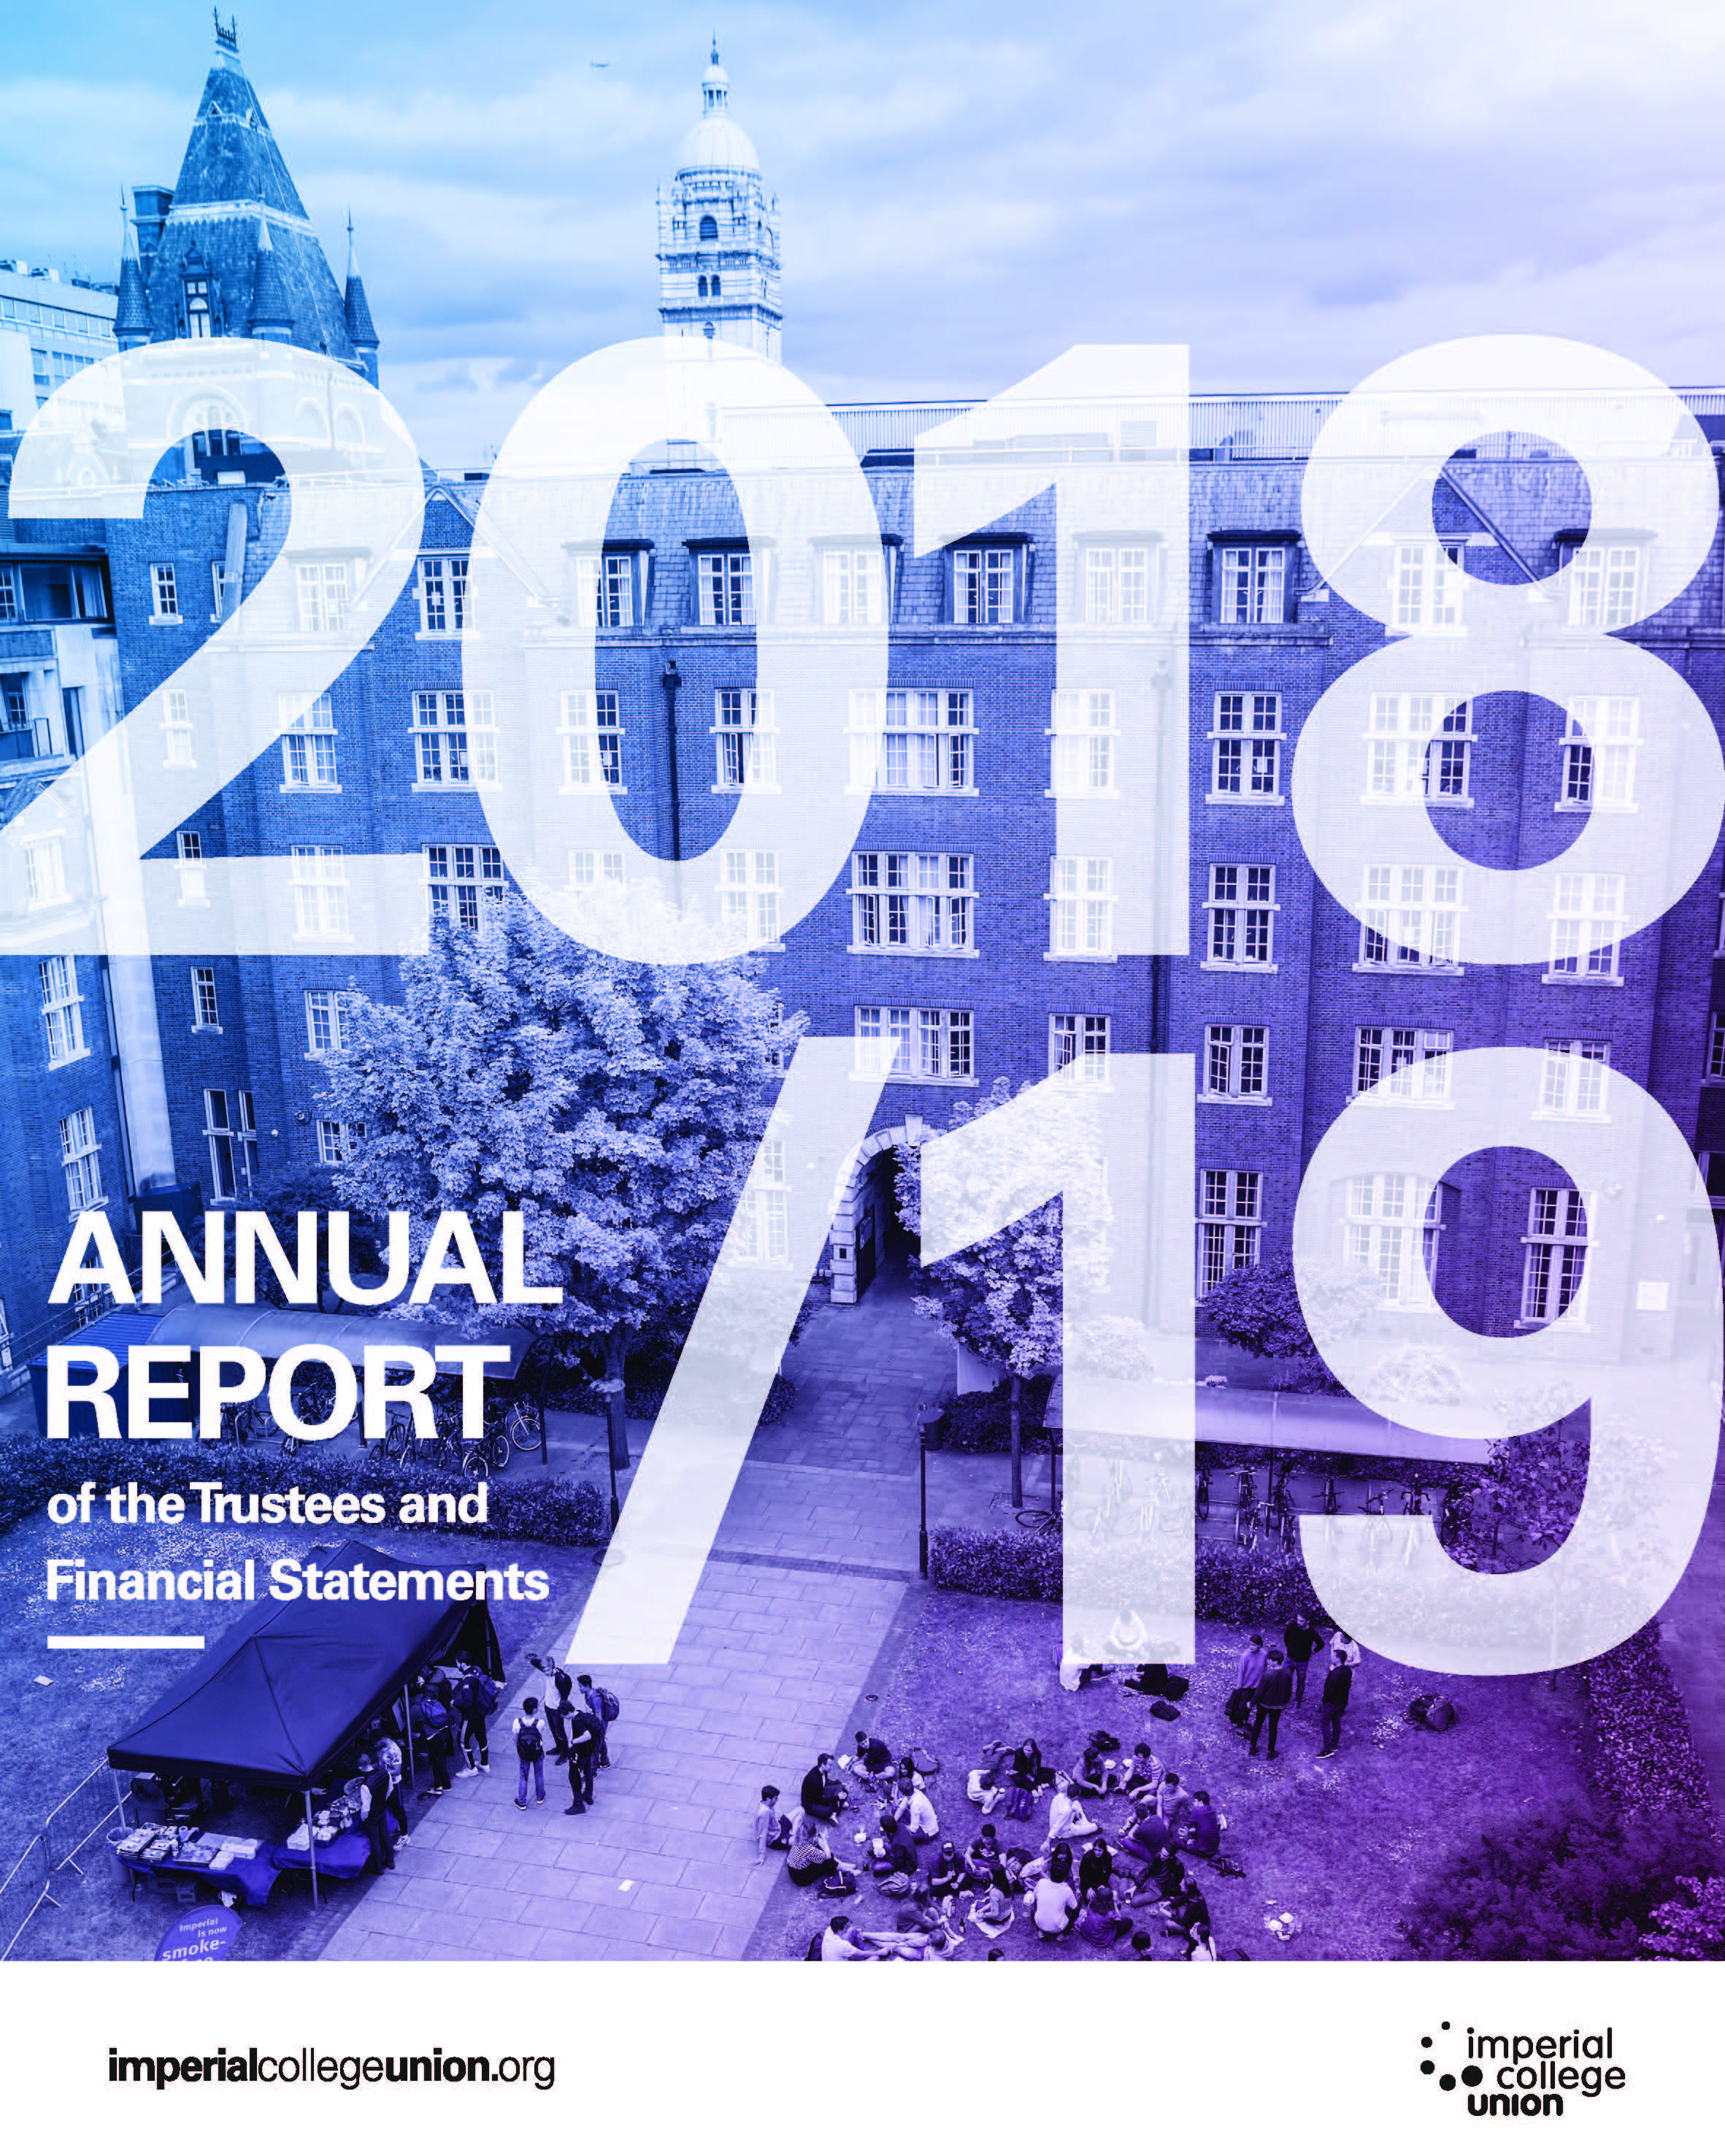 Annual Report 2018/19